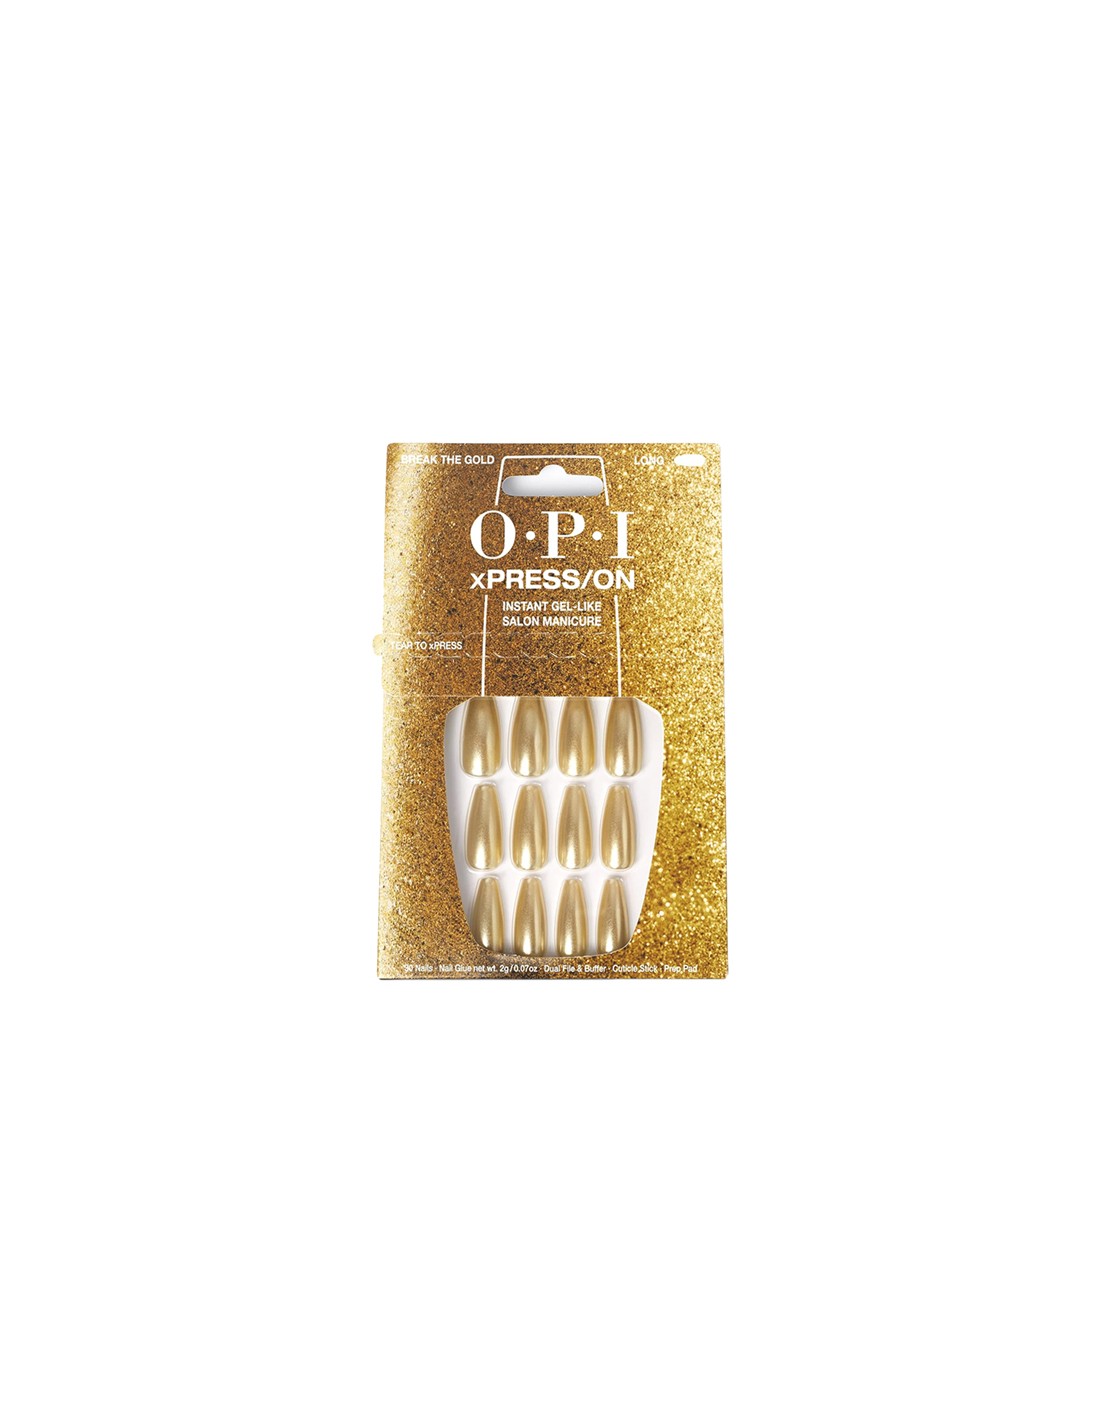 OPI xPRESS/ON Nails Long Break the Gold